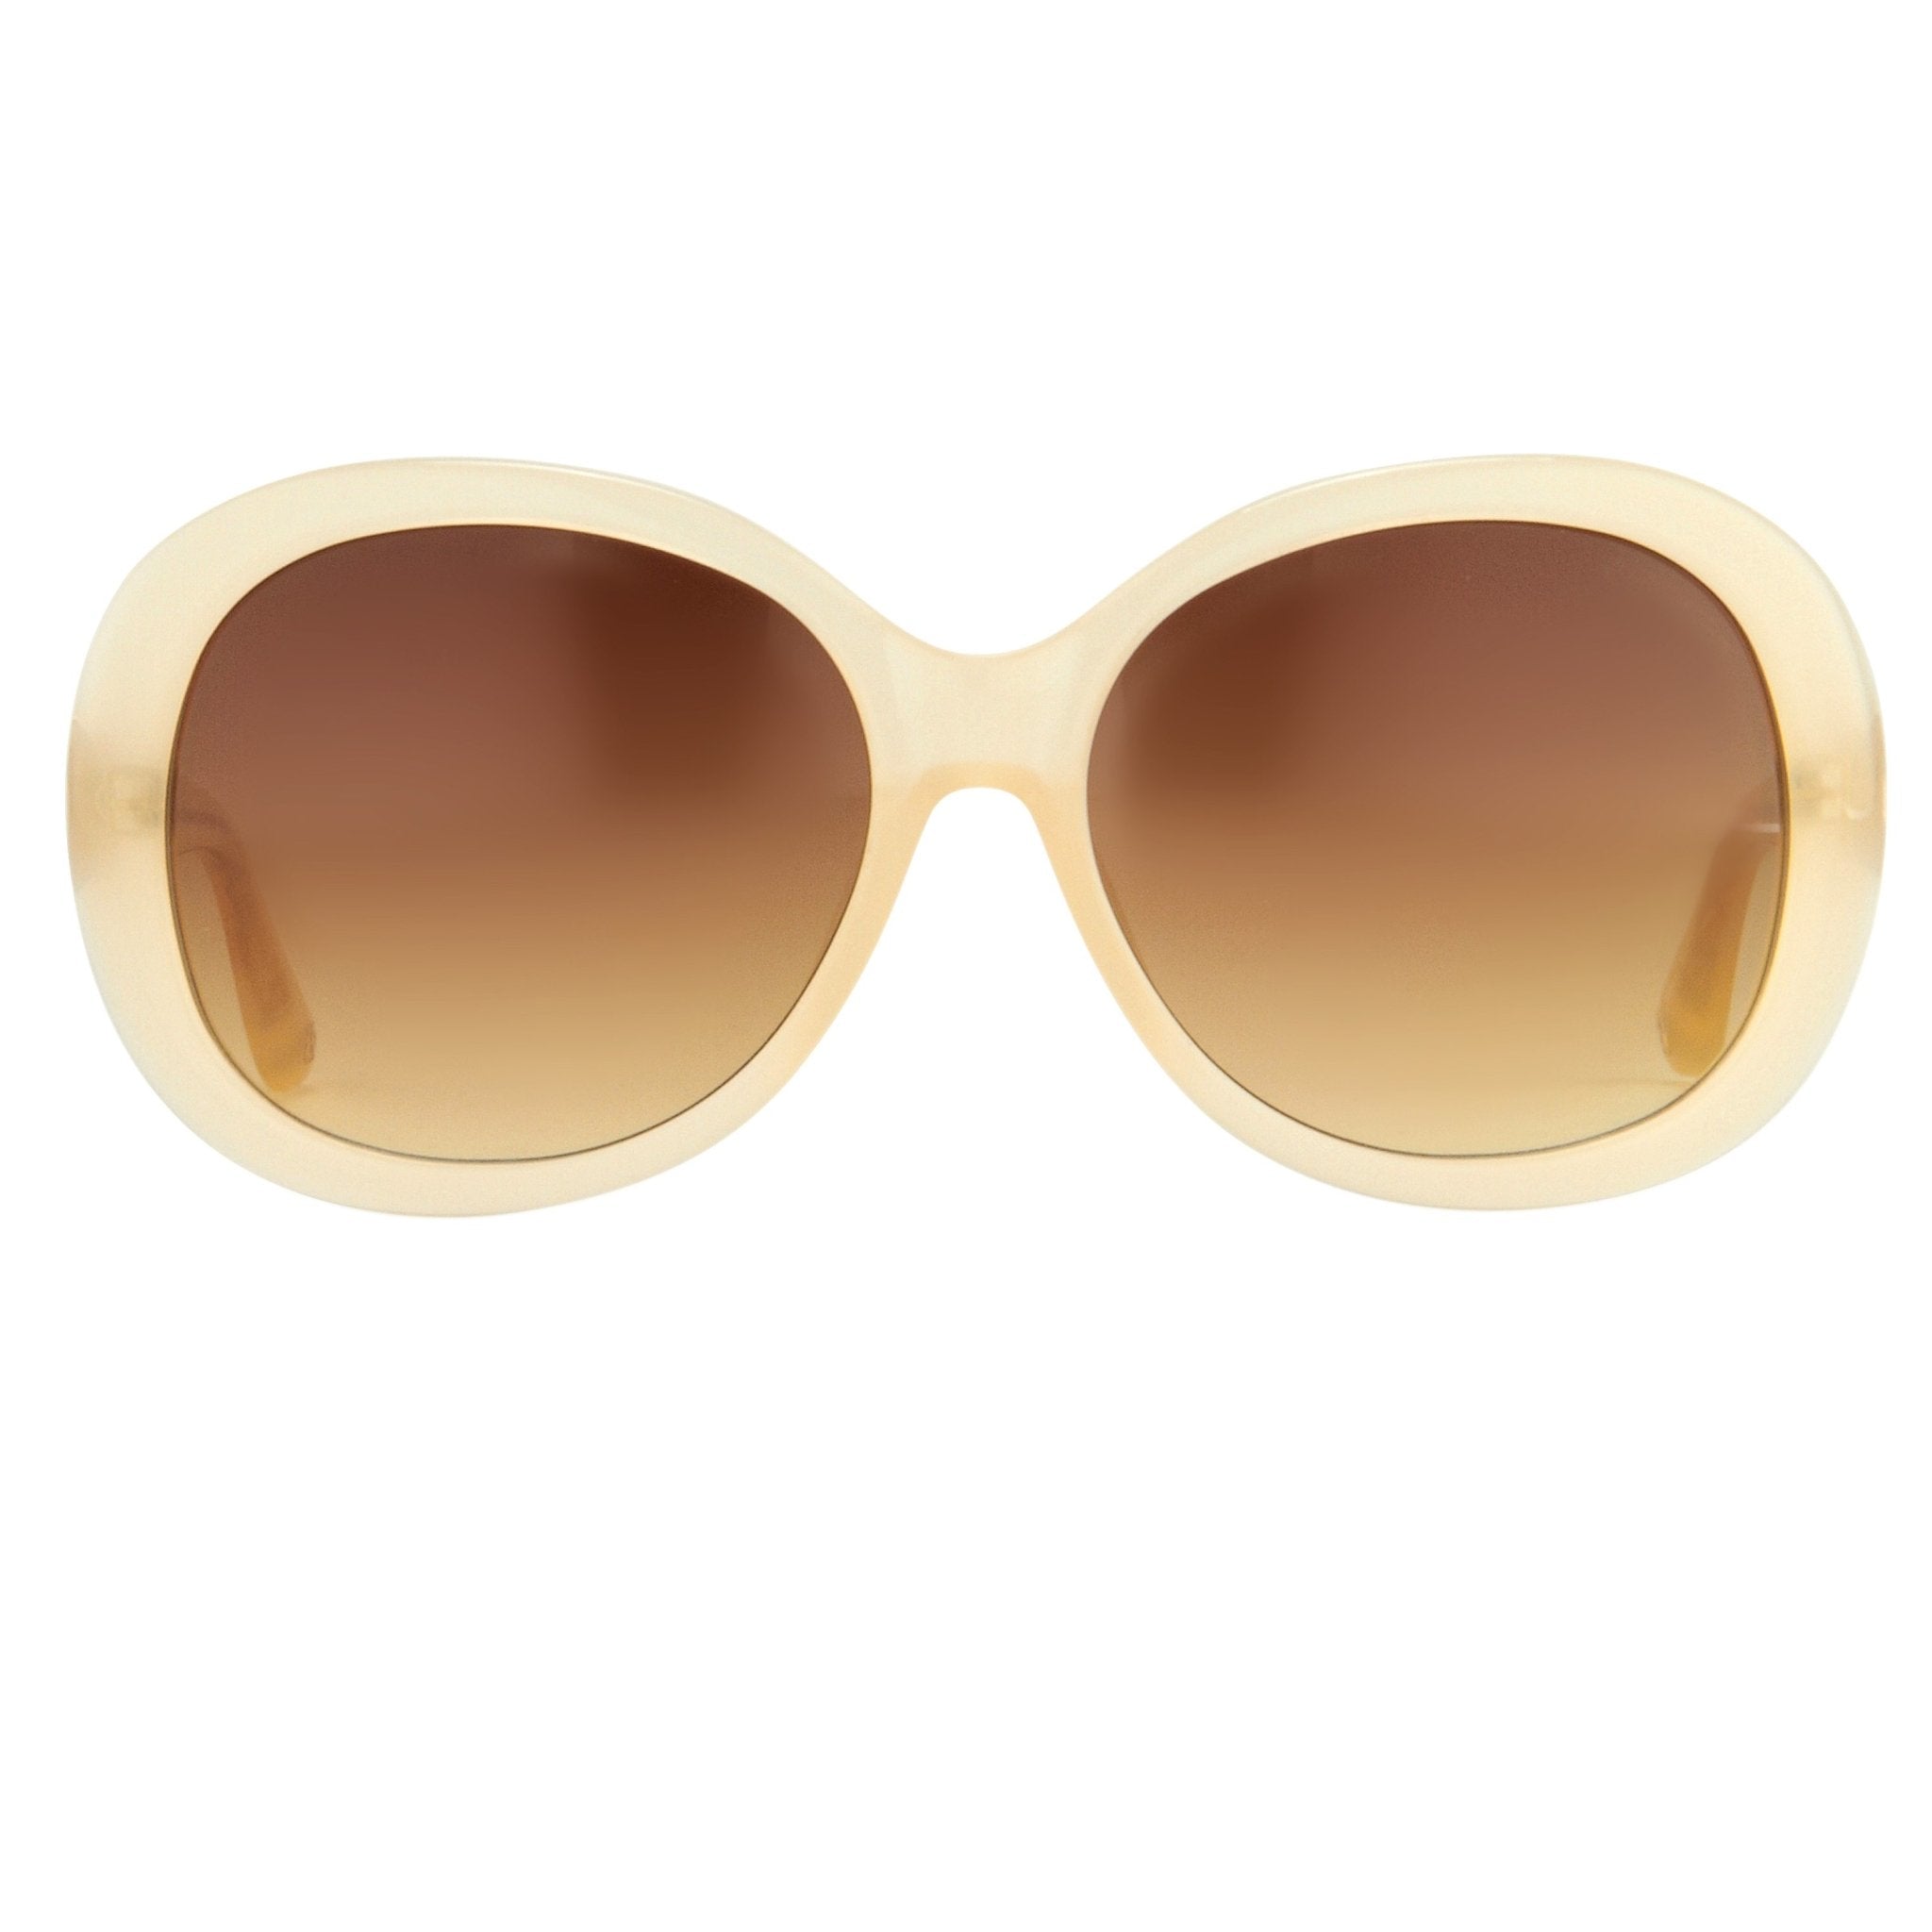 Oscar De La Renta Sunglasses Oversized Frame Nude and Amber Lenses - ODLR46C5SUN - Watches & Crystals